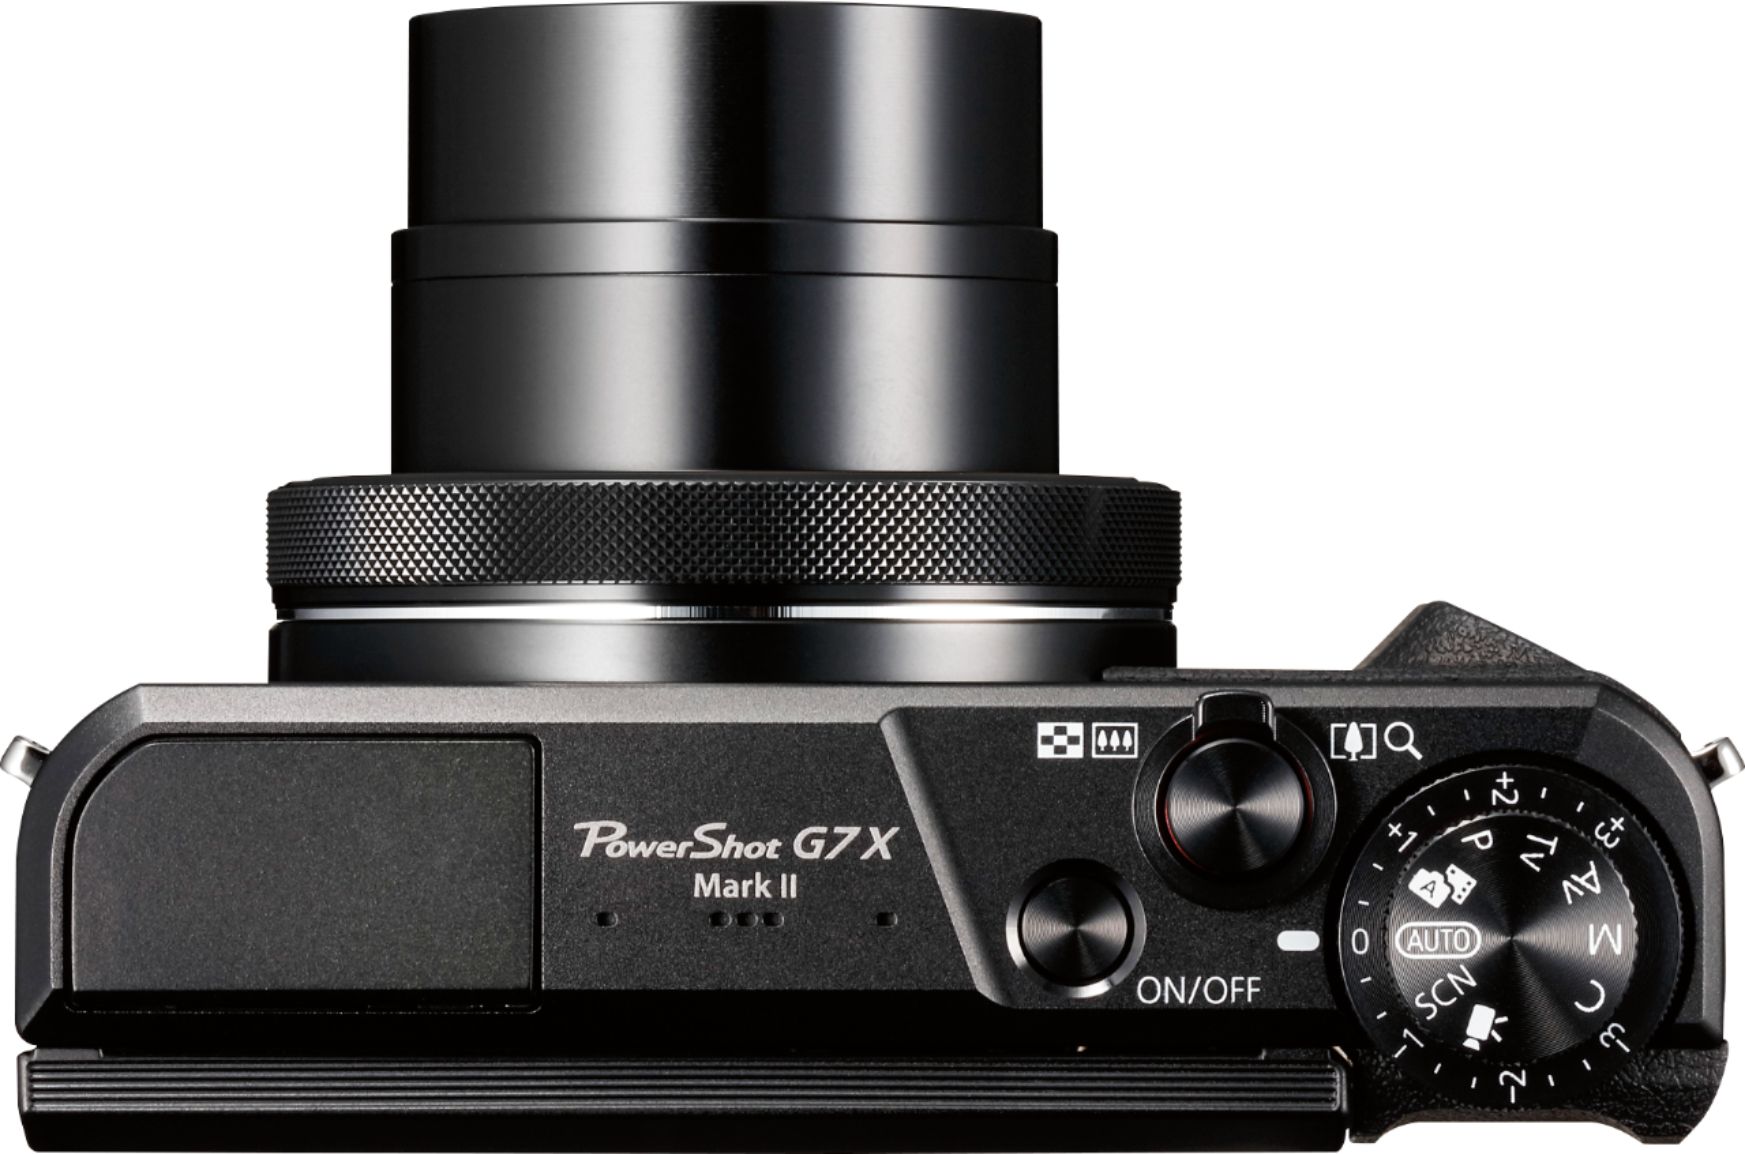 Canon Powershot G7 X Mark Ii 1 Megapixel Digital Video Camera Black 1066c001 Best Buy